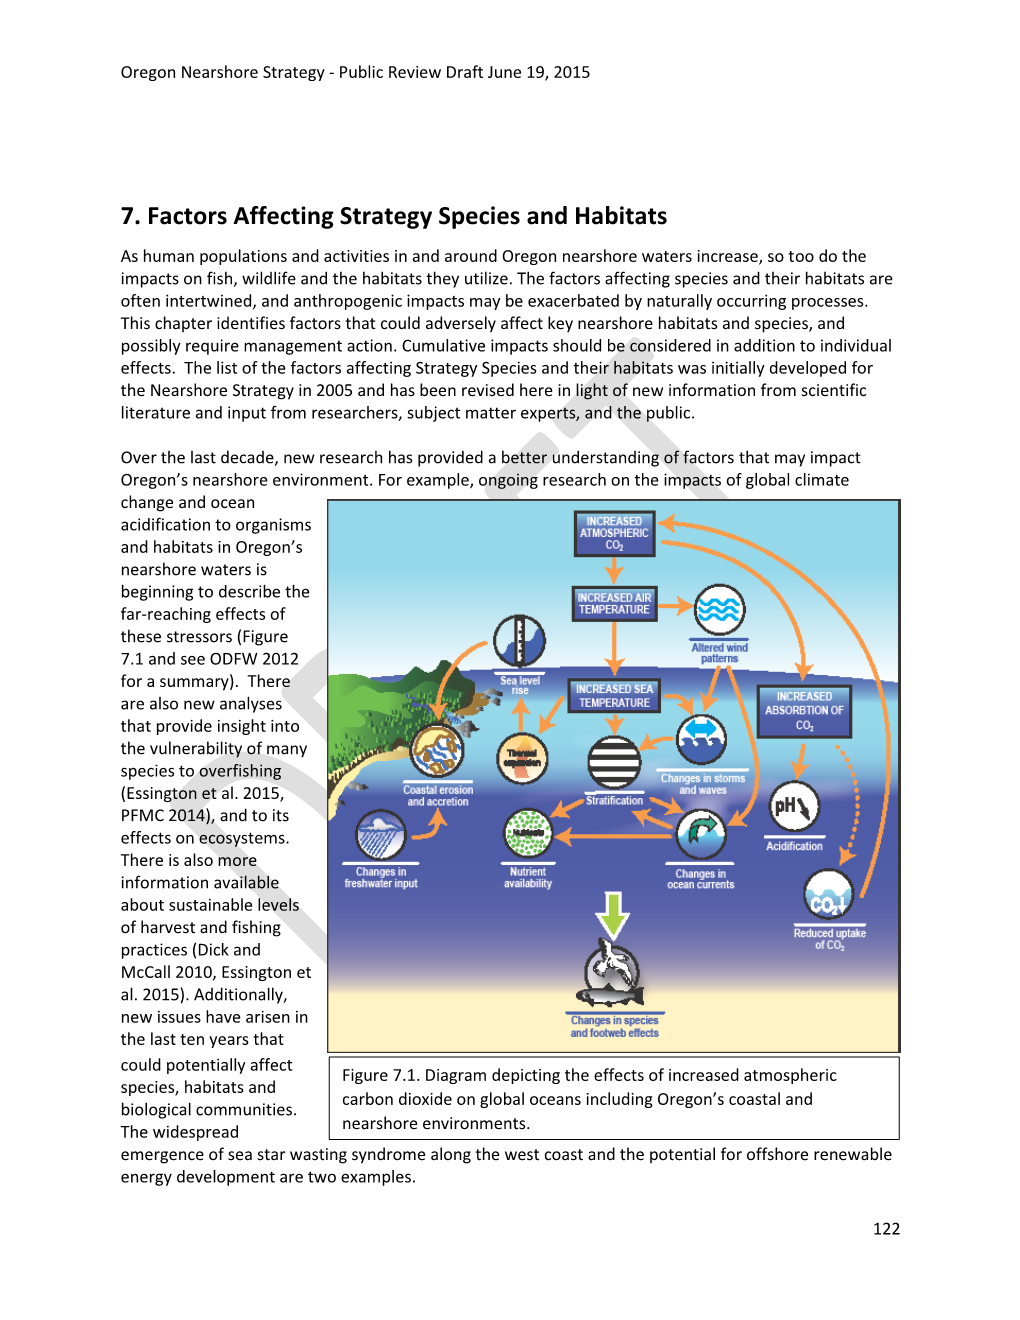 7. Factors Affecting Strategy Species and Habitats